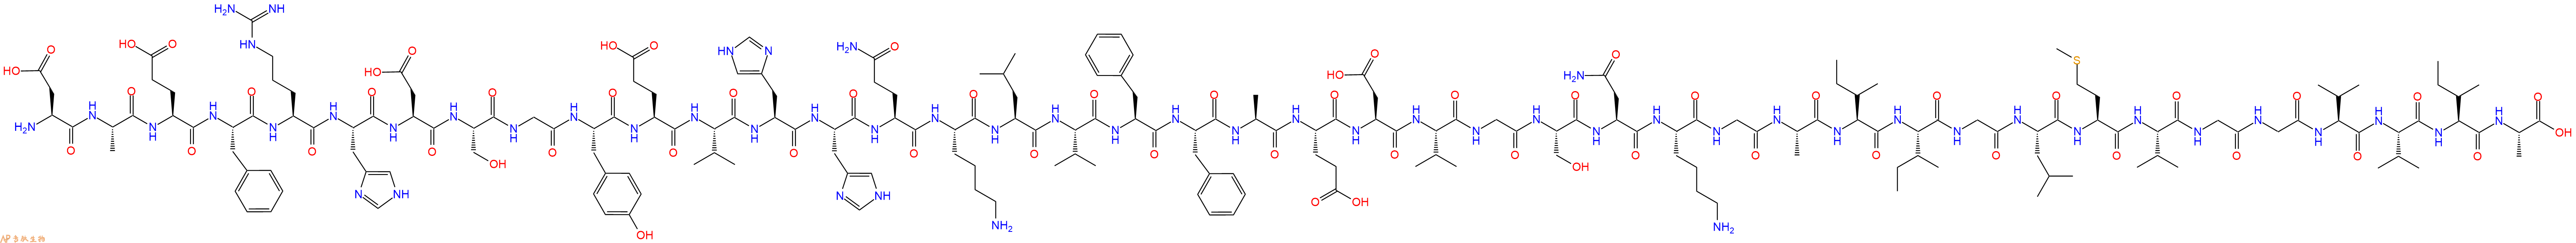 107761-42-2,淀粉肽Amyloid β-Protein (1-42) (human)，Aβ1-42、Aβ42,H2N-Asp-Ala-Glu-Phe-Arg-His-Asp-Ser-Gly-Tyr-Glu-Val-His-His-Gln-Lys-Leu-Val-Phe-Phe-Ala-Glu-Asp-Val-Gly-Ser-Asn-Lys-Gly-Ala-Ile-Ile-Gly-Leu-Met-Val-Gly-Gly-Val-Val-Ile-Ala-COOH,H2N-DAEFRHDSGYEVHHQKLVFFAEDVGSNKGAIIGLMVGGVVIA-OH